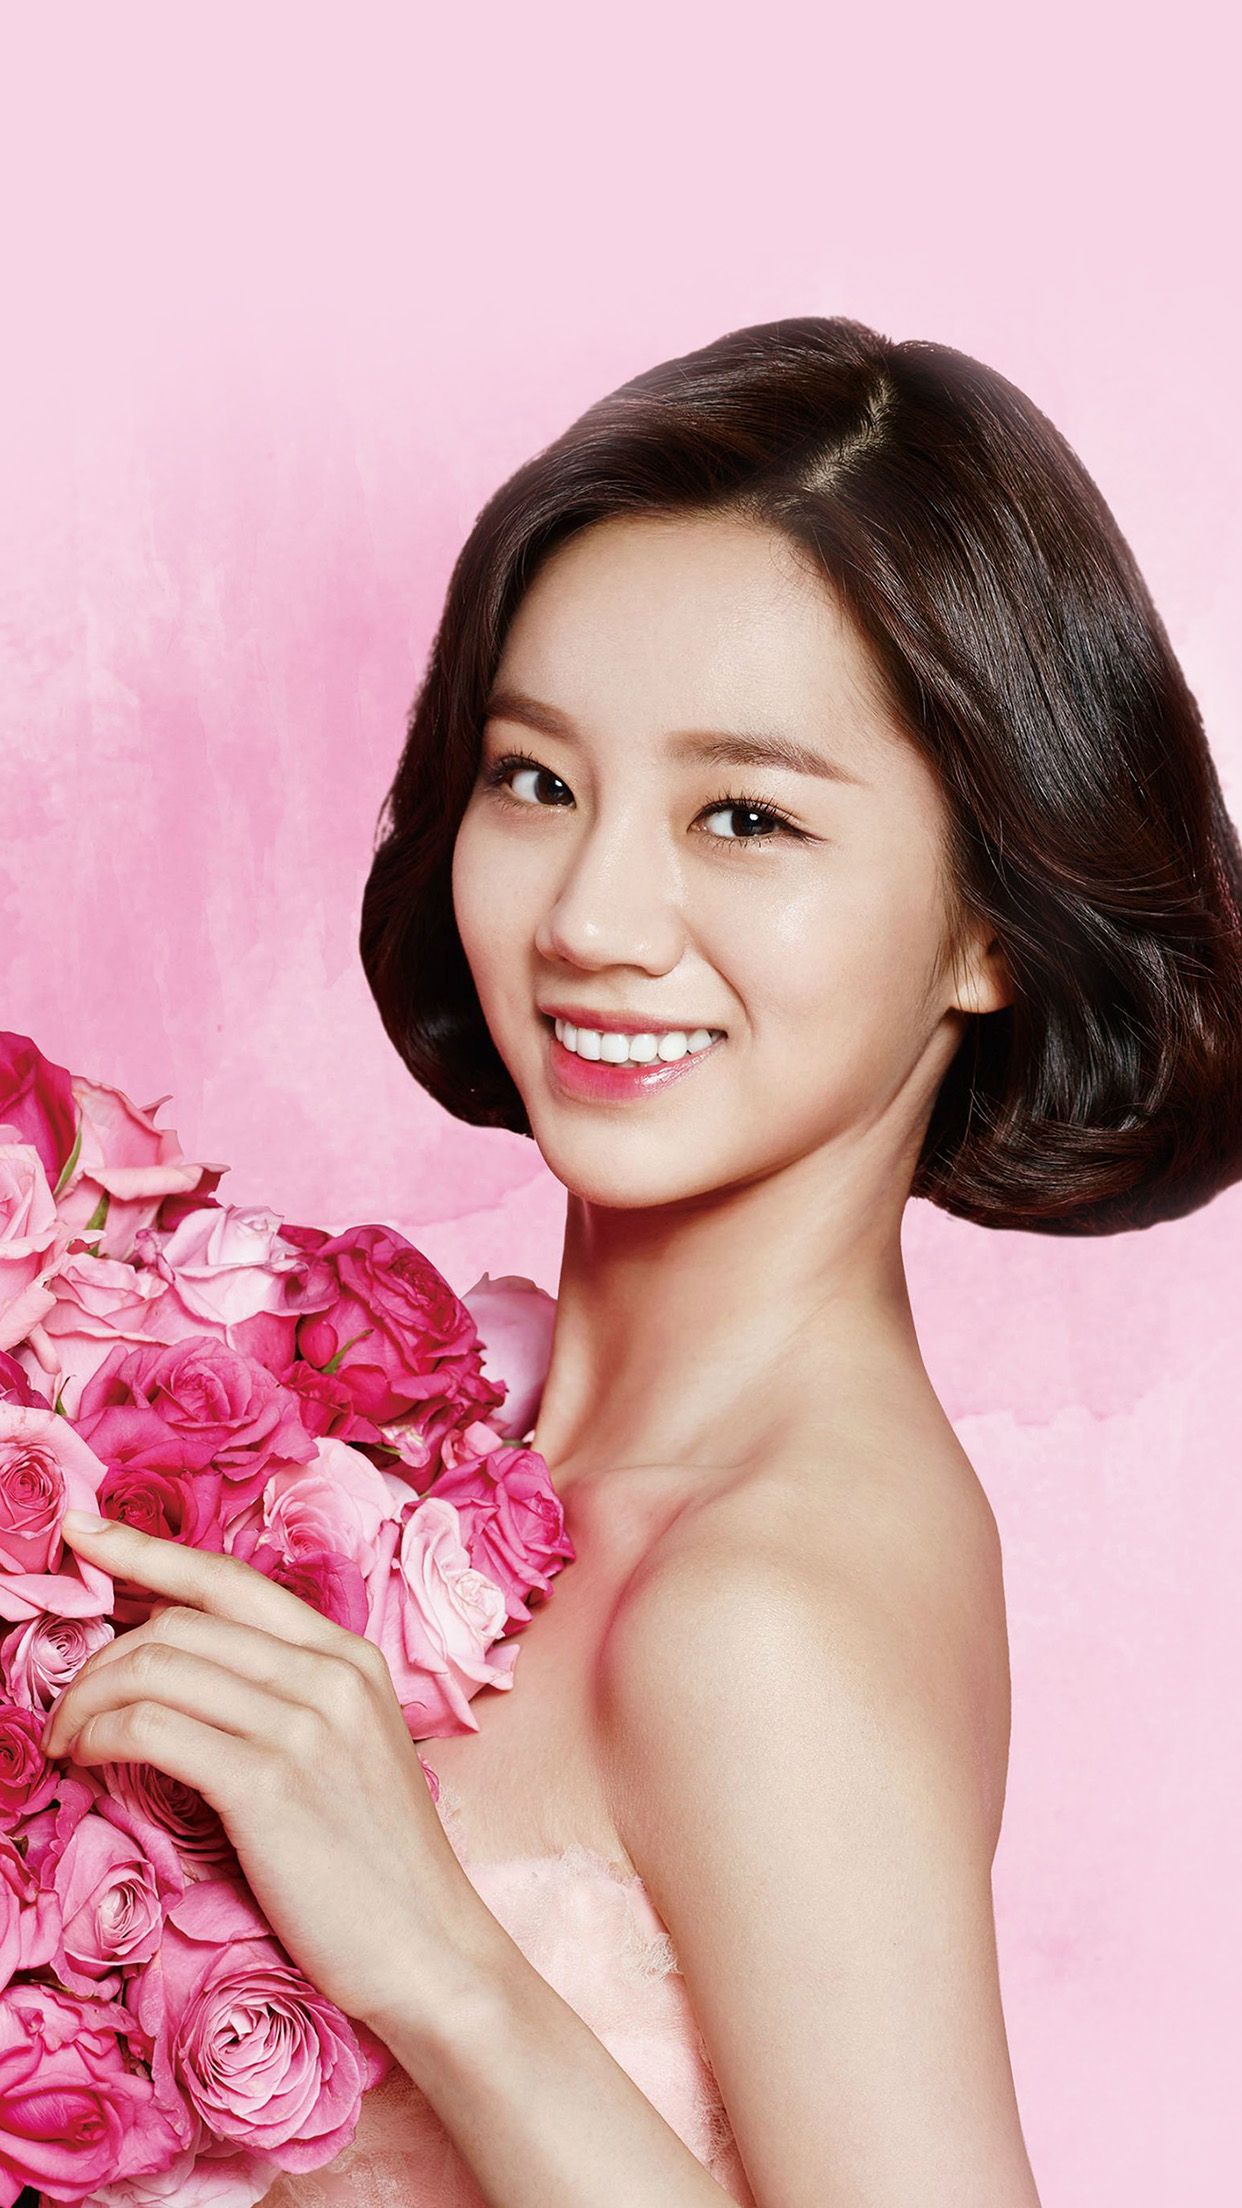 iPhone X wallpaper. flower hyeri cute pink kpop girl